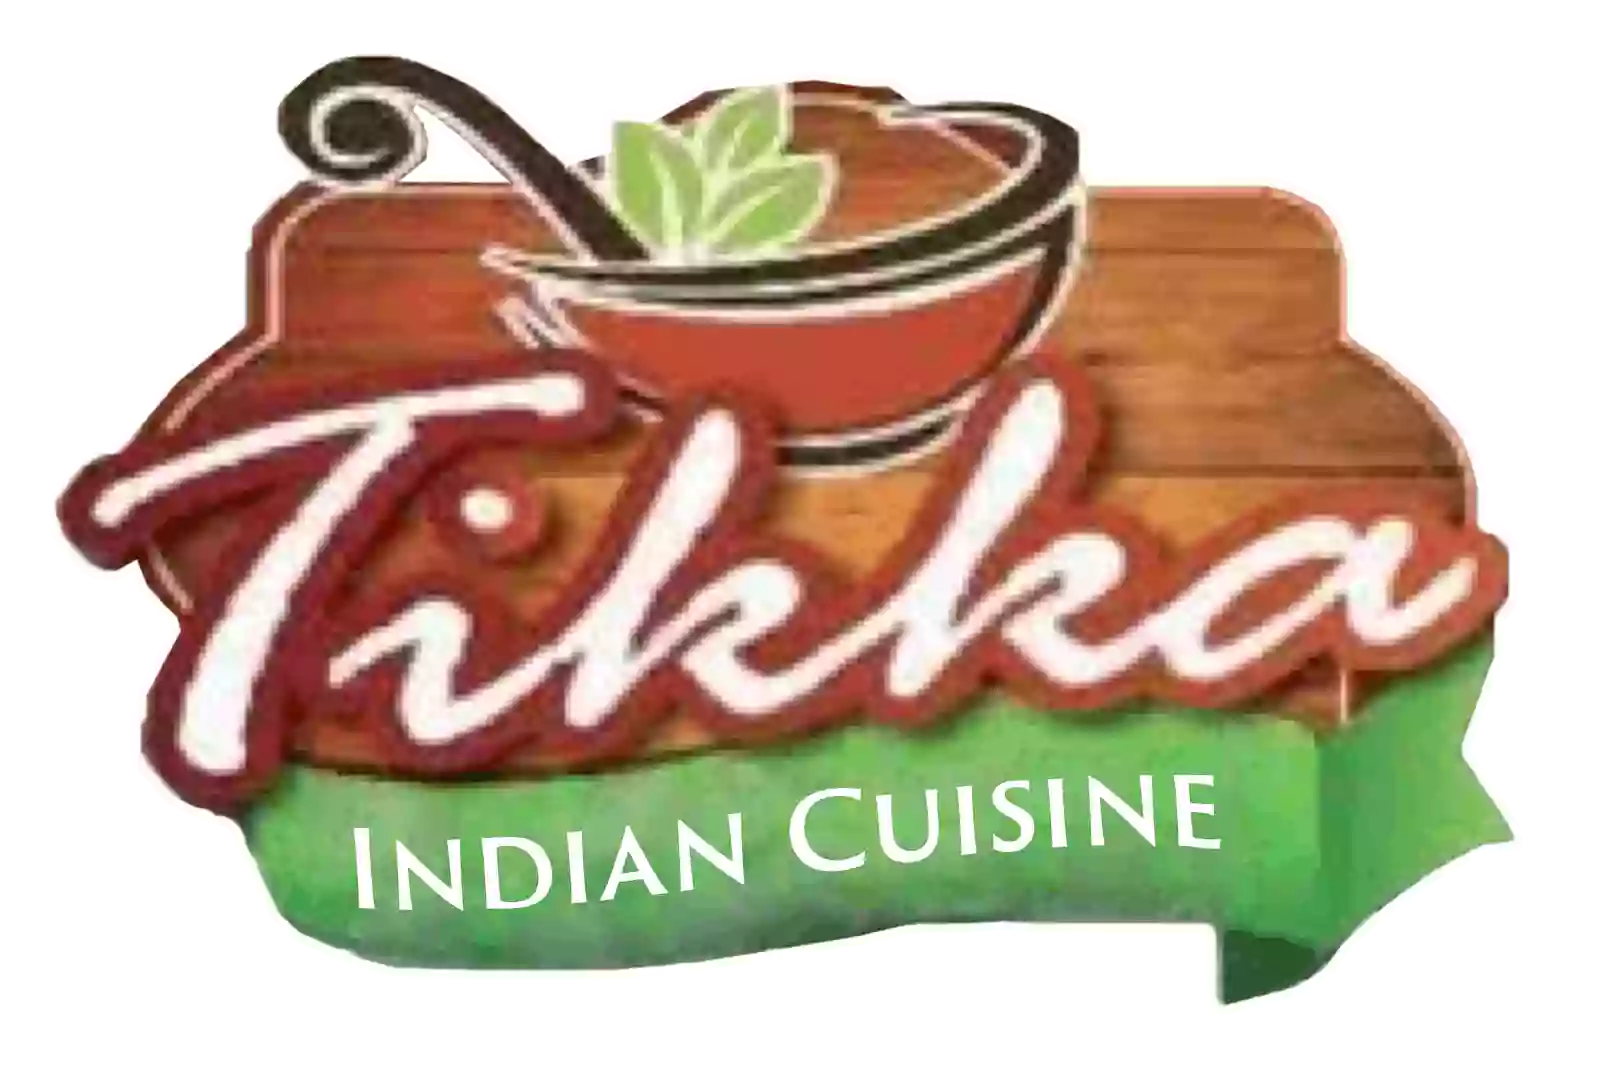 Tikka Indian Cuisine